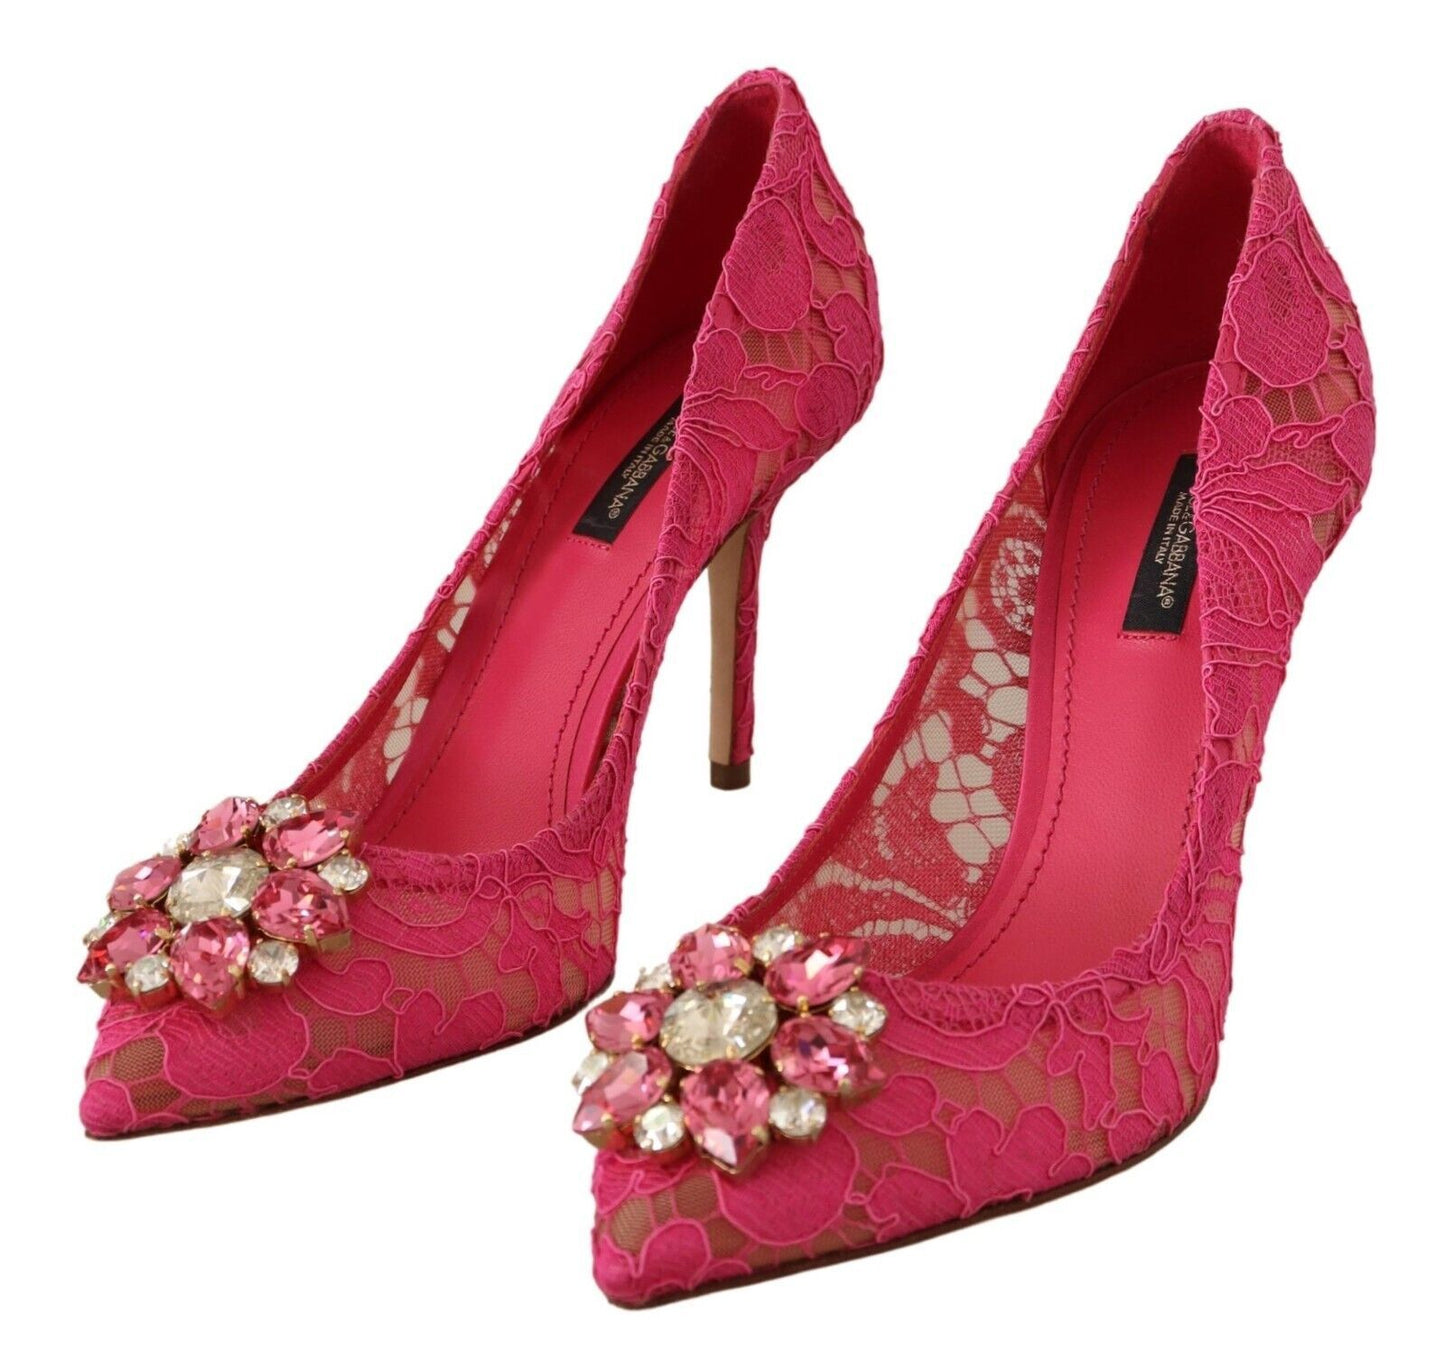 Crystal-Embellished Lace Heels in Pink